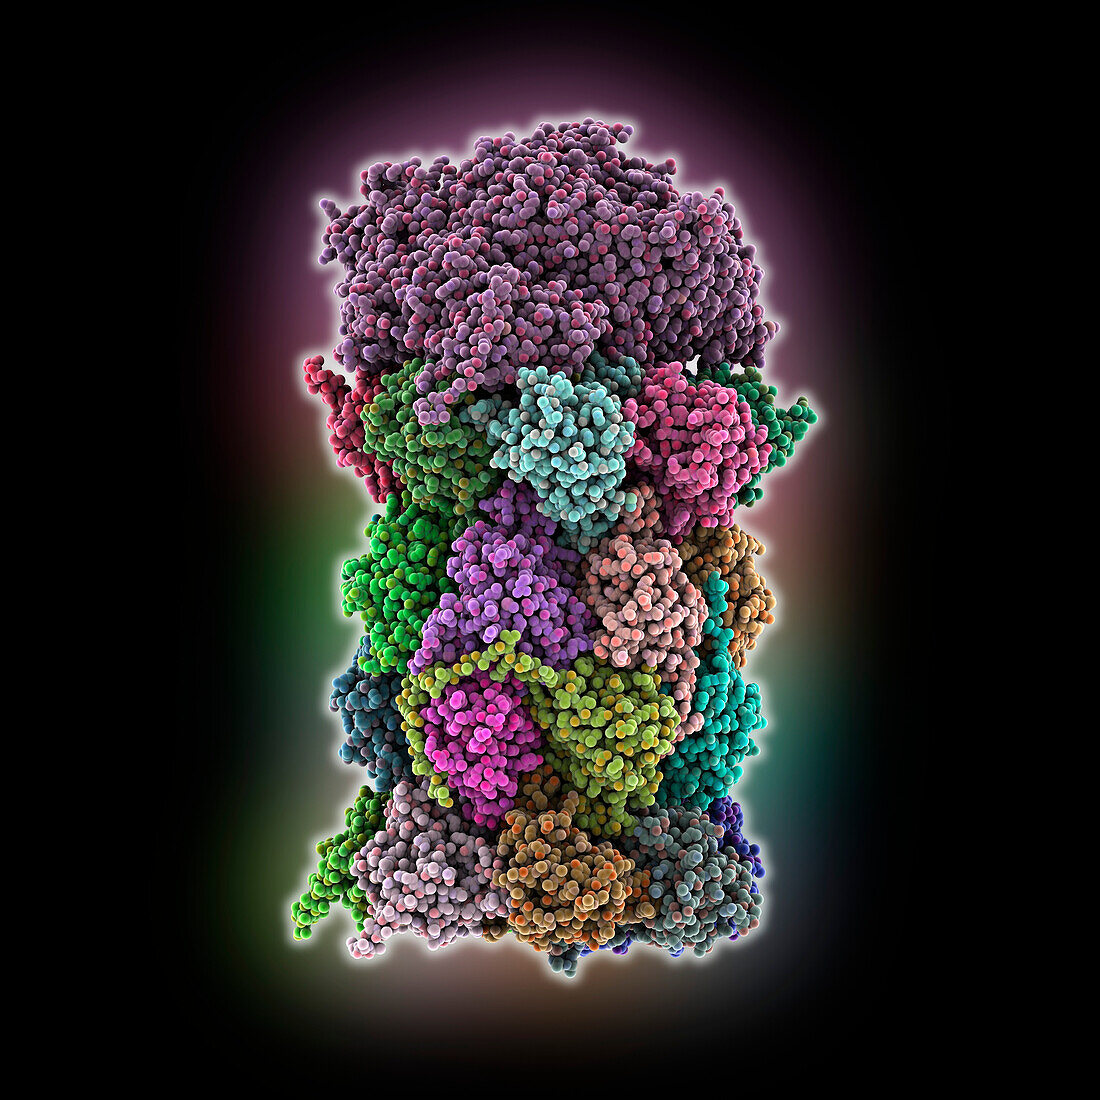 Human PA200-20S proteasome complex, molecular model